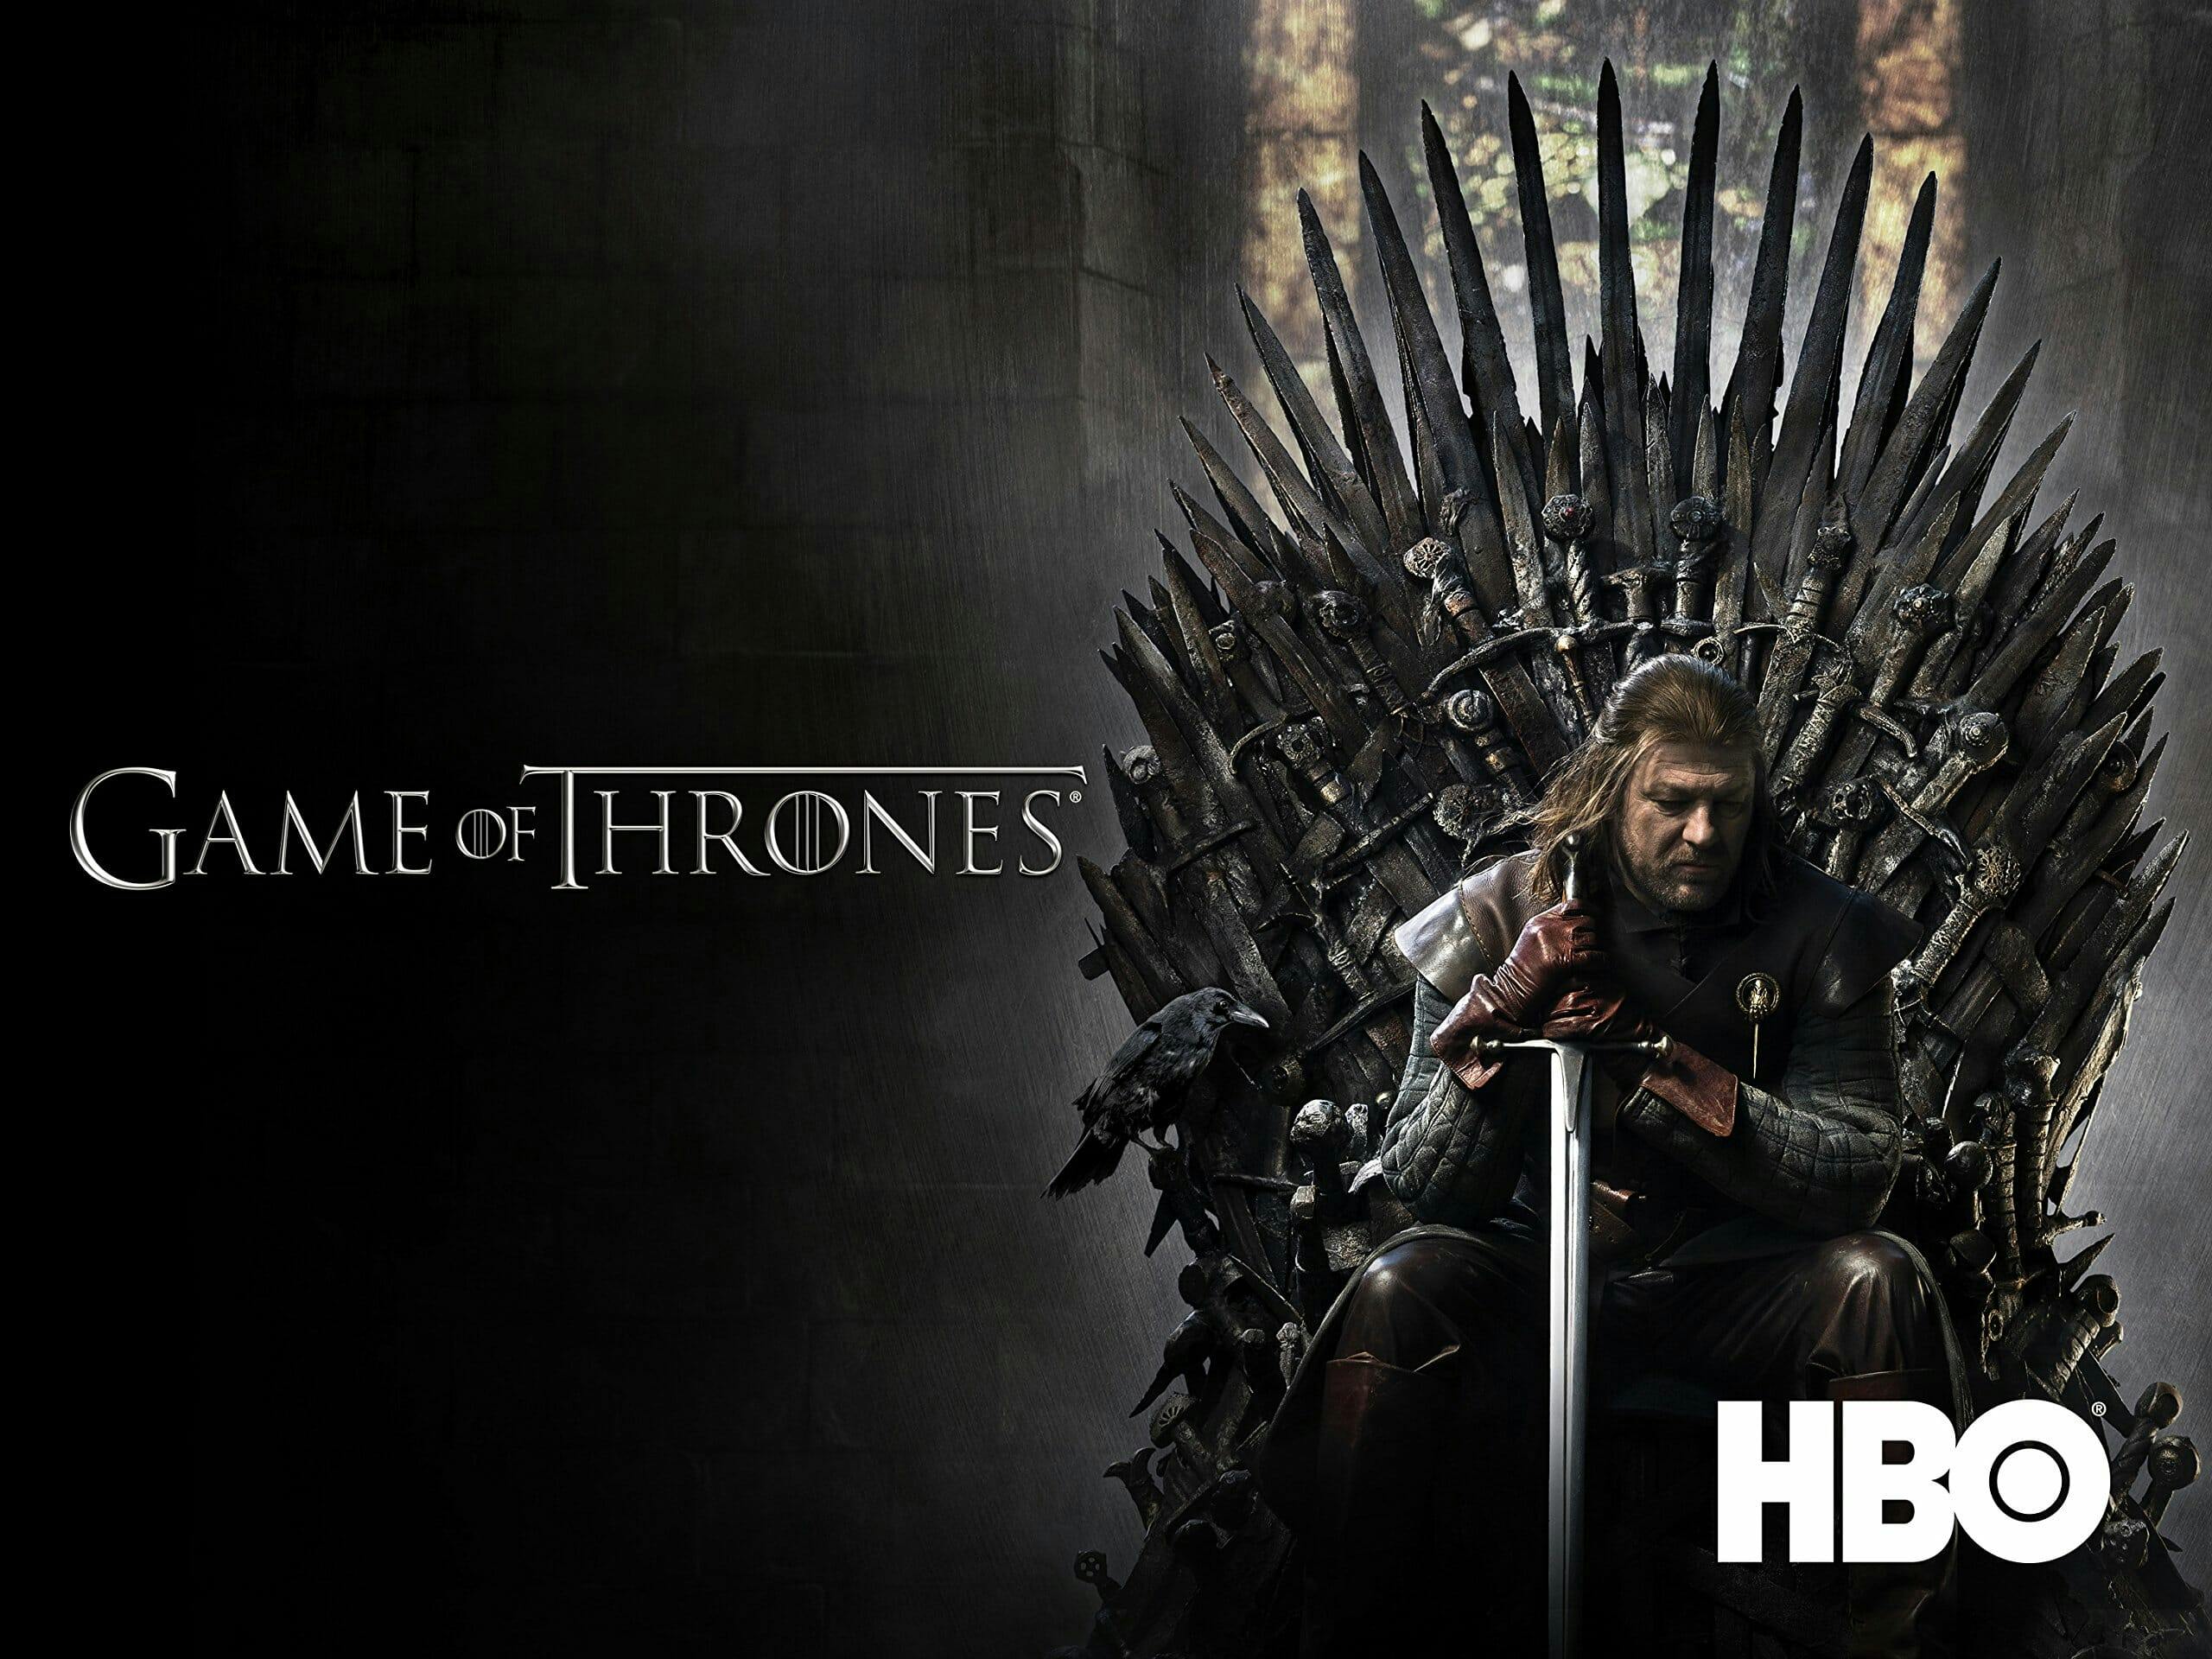 watch game of thrones season 8 online free on Amazon